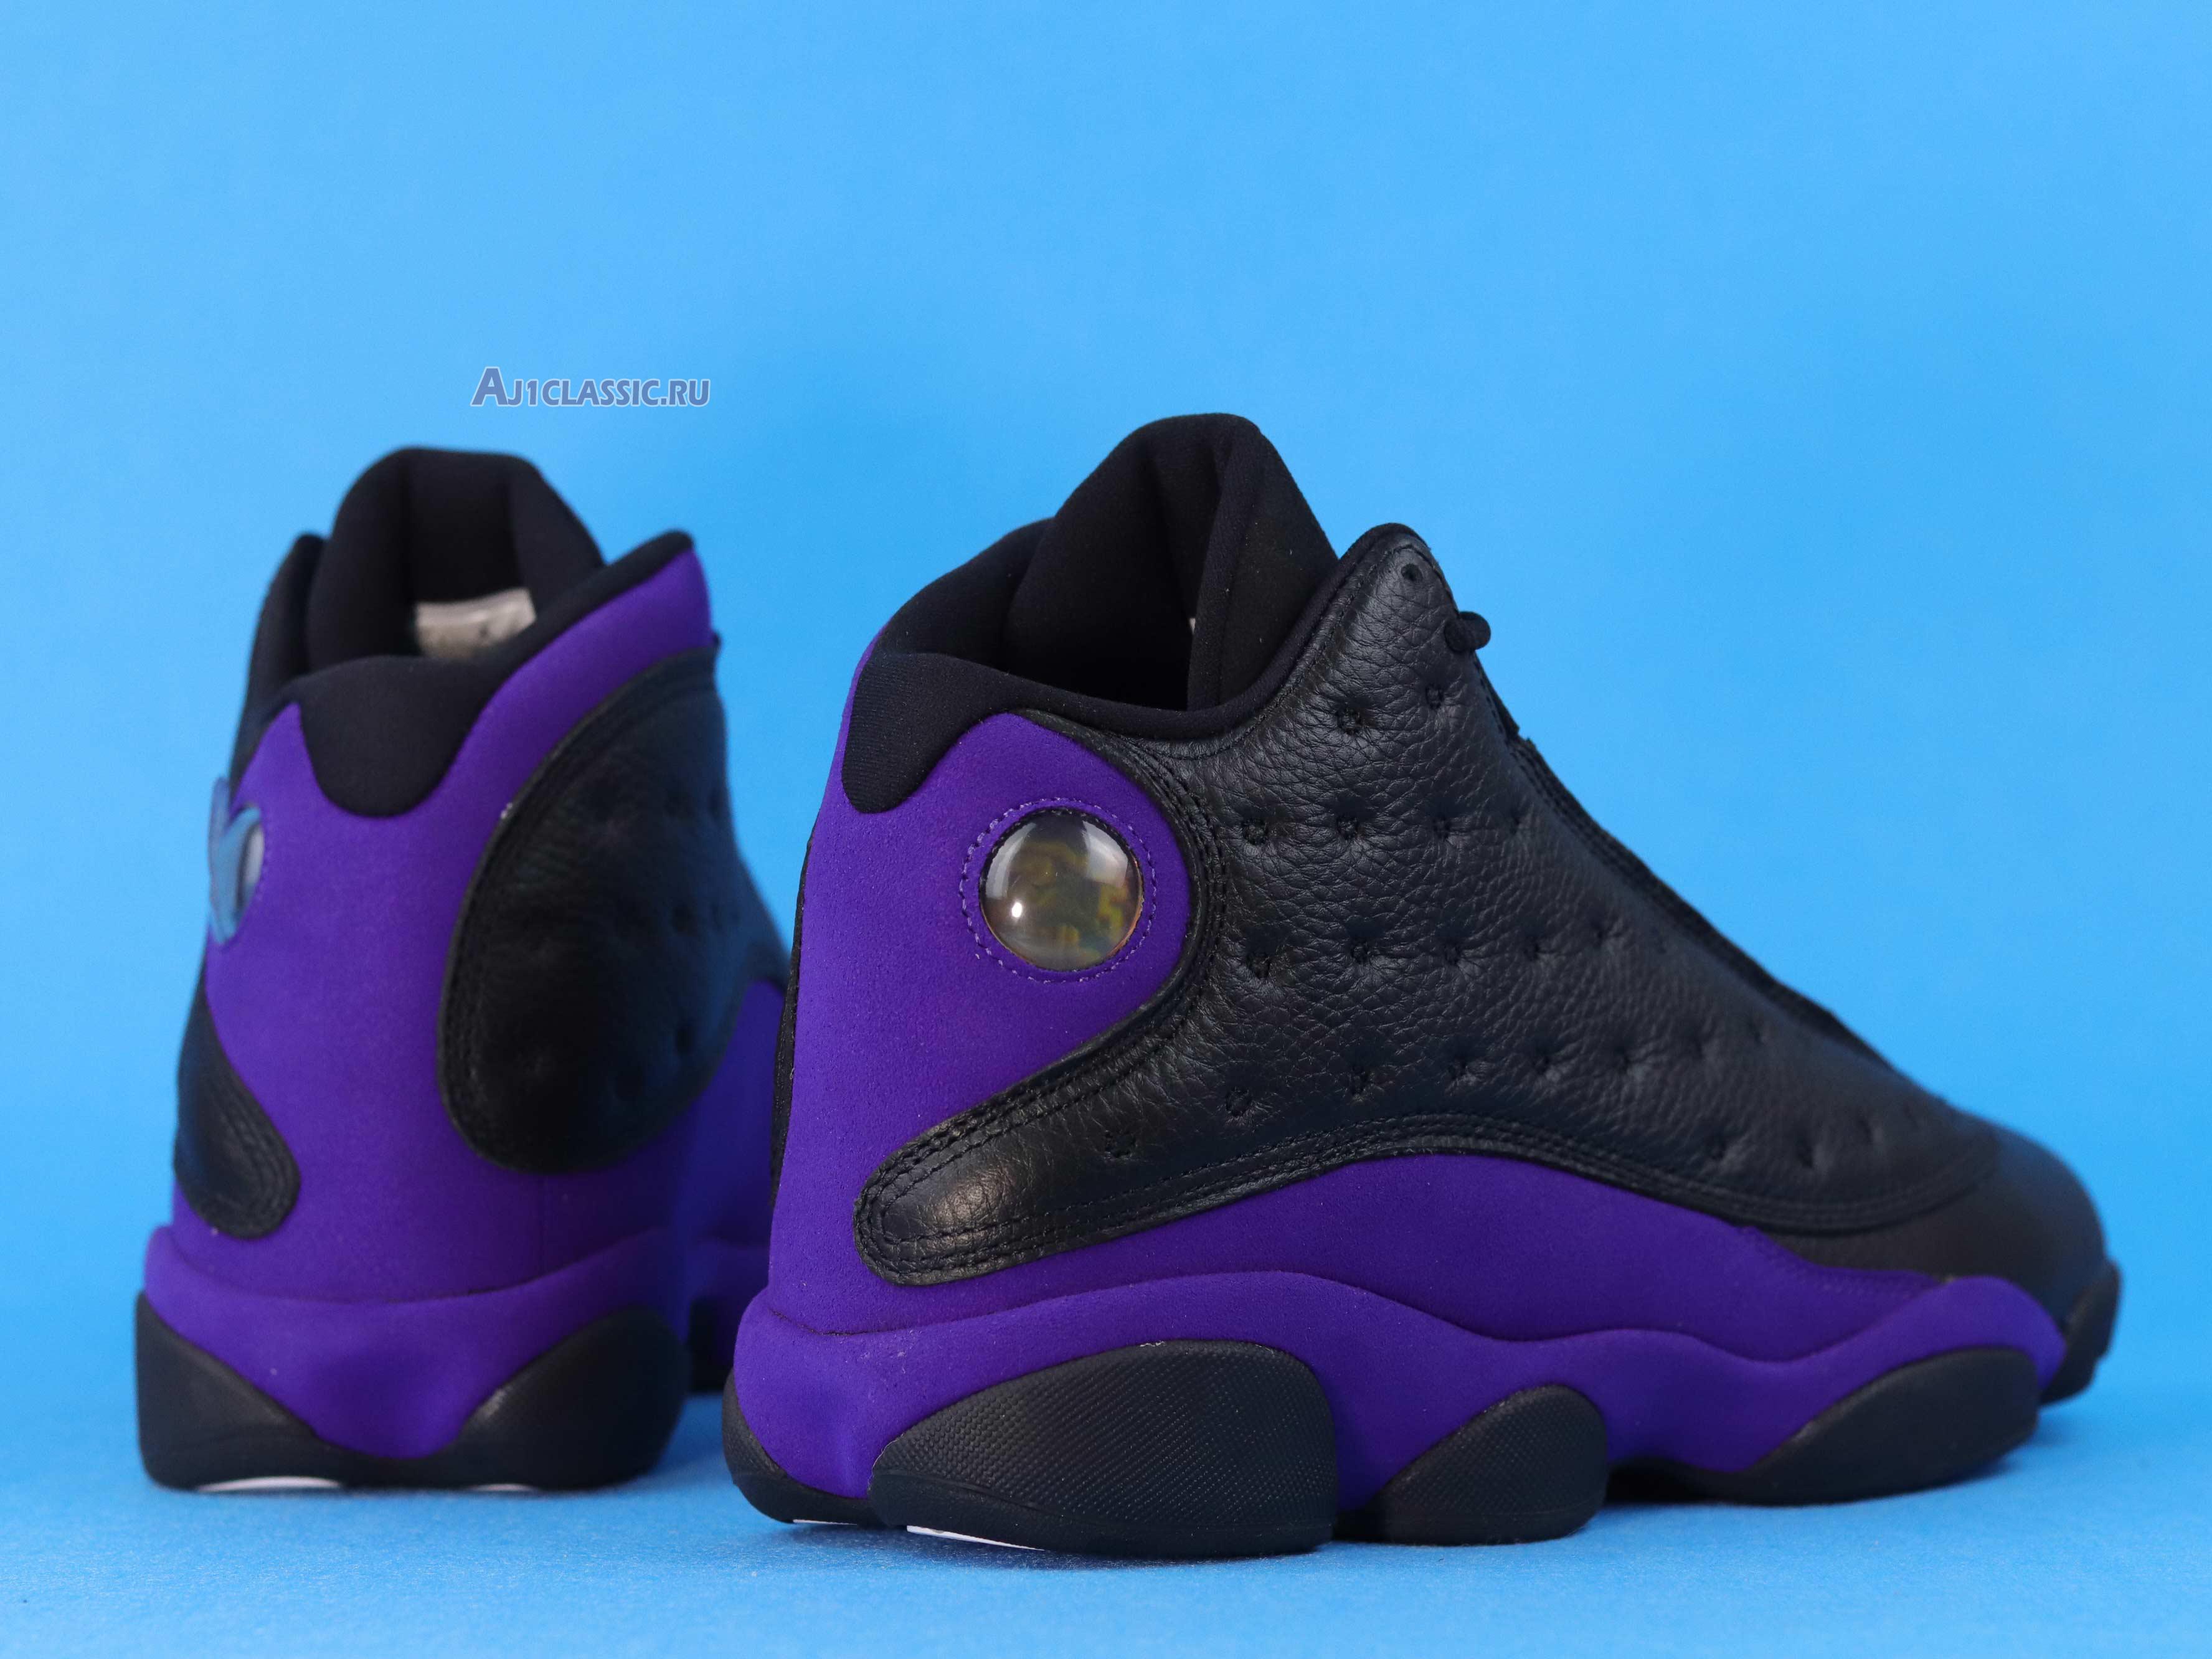 Air Jordan 13 Retro "Court Purple" DJ5982-015